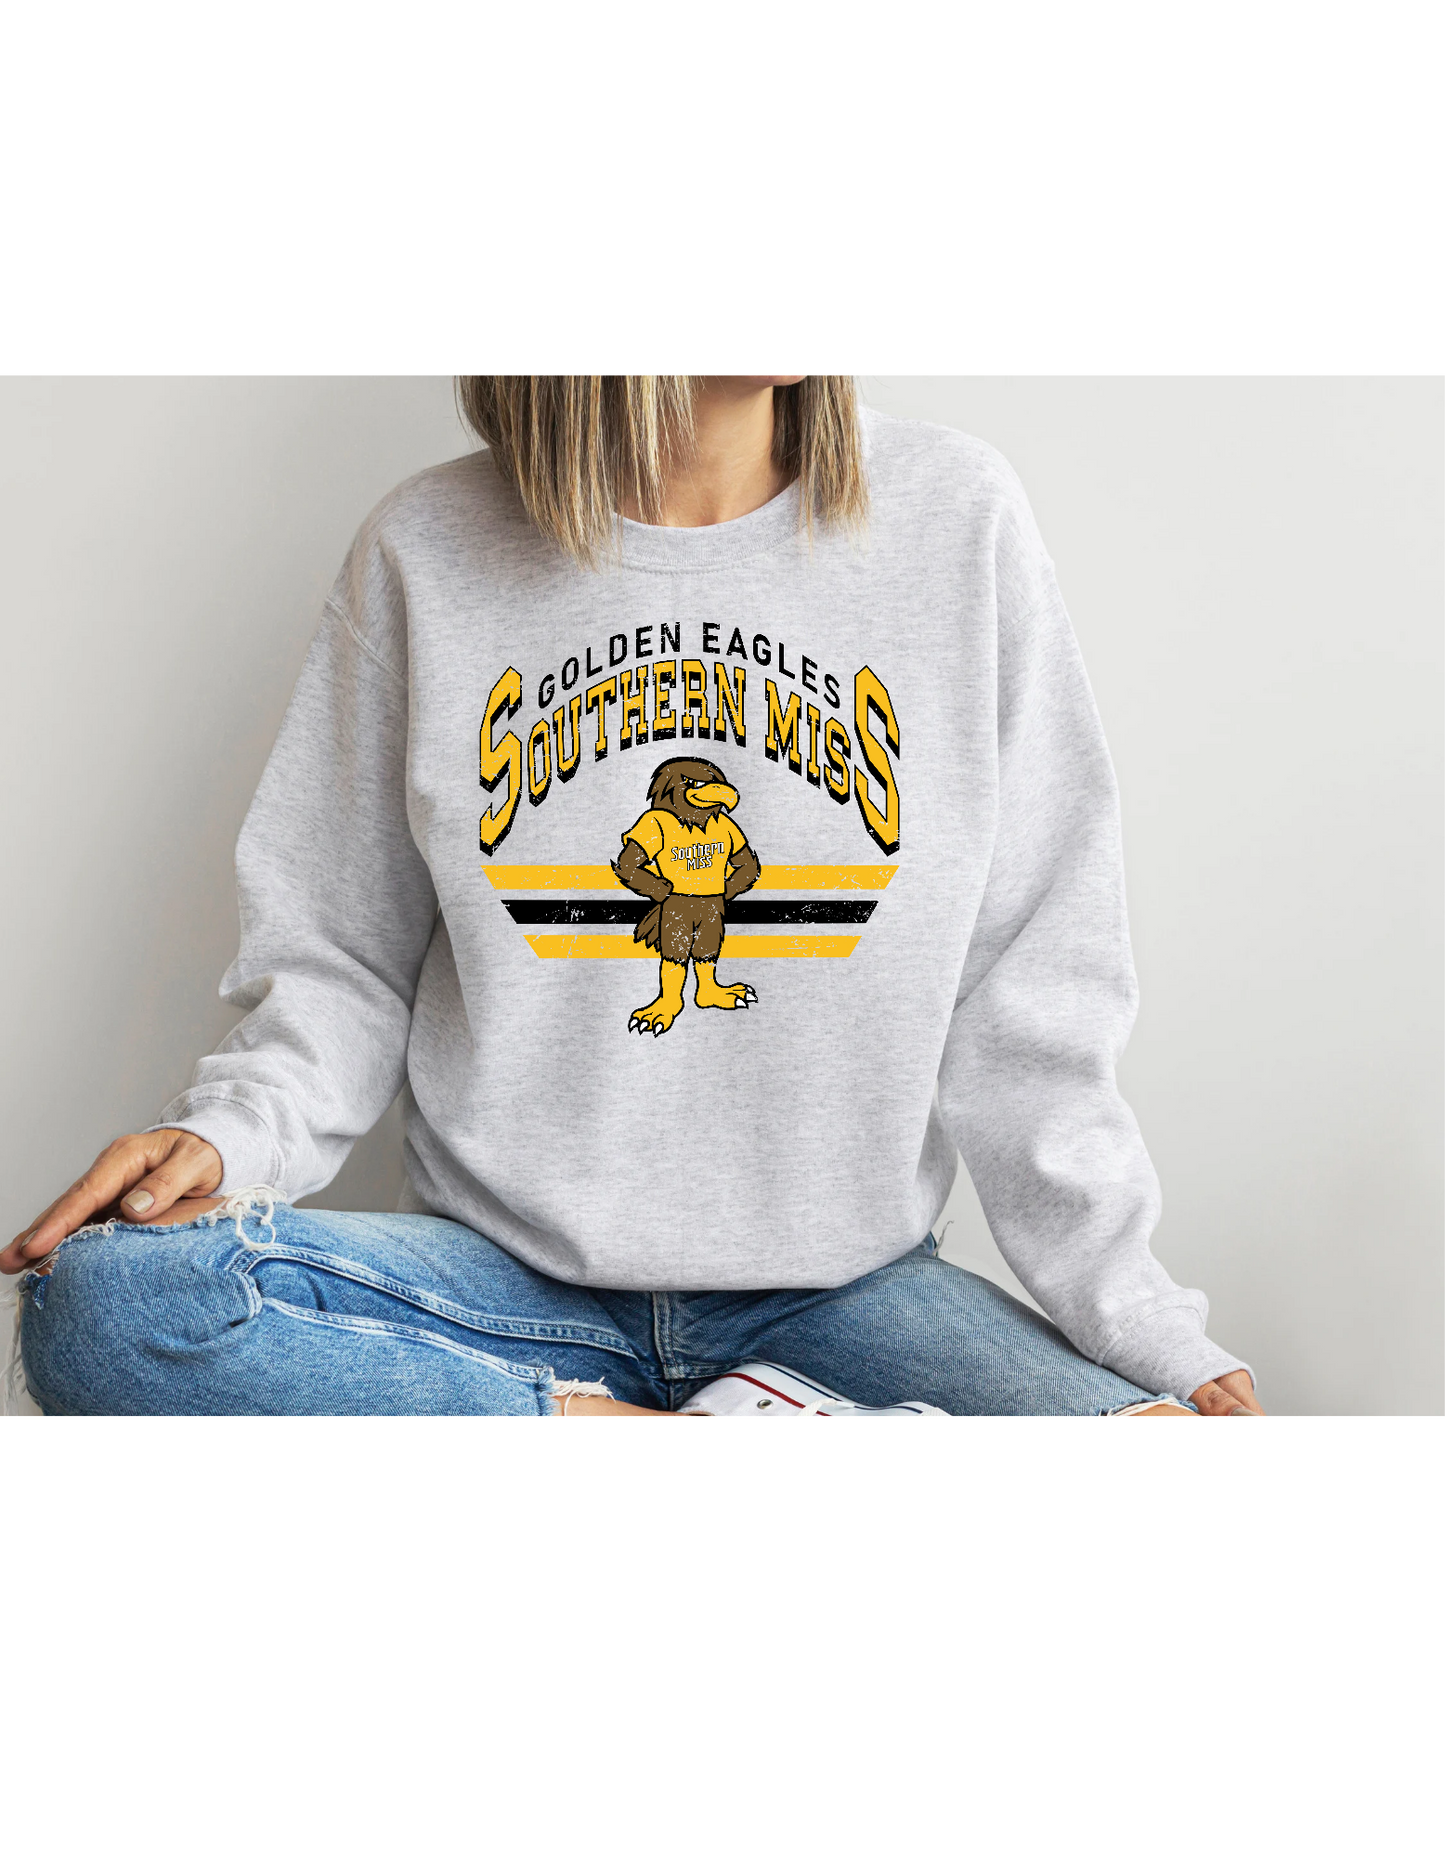 Vintage retro College football sweatshirts / t shirts